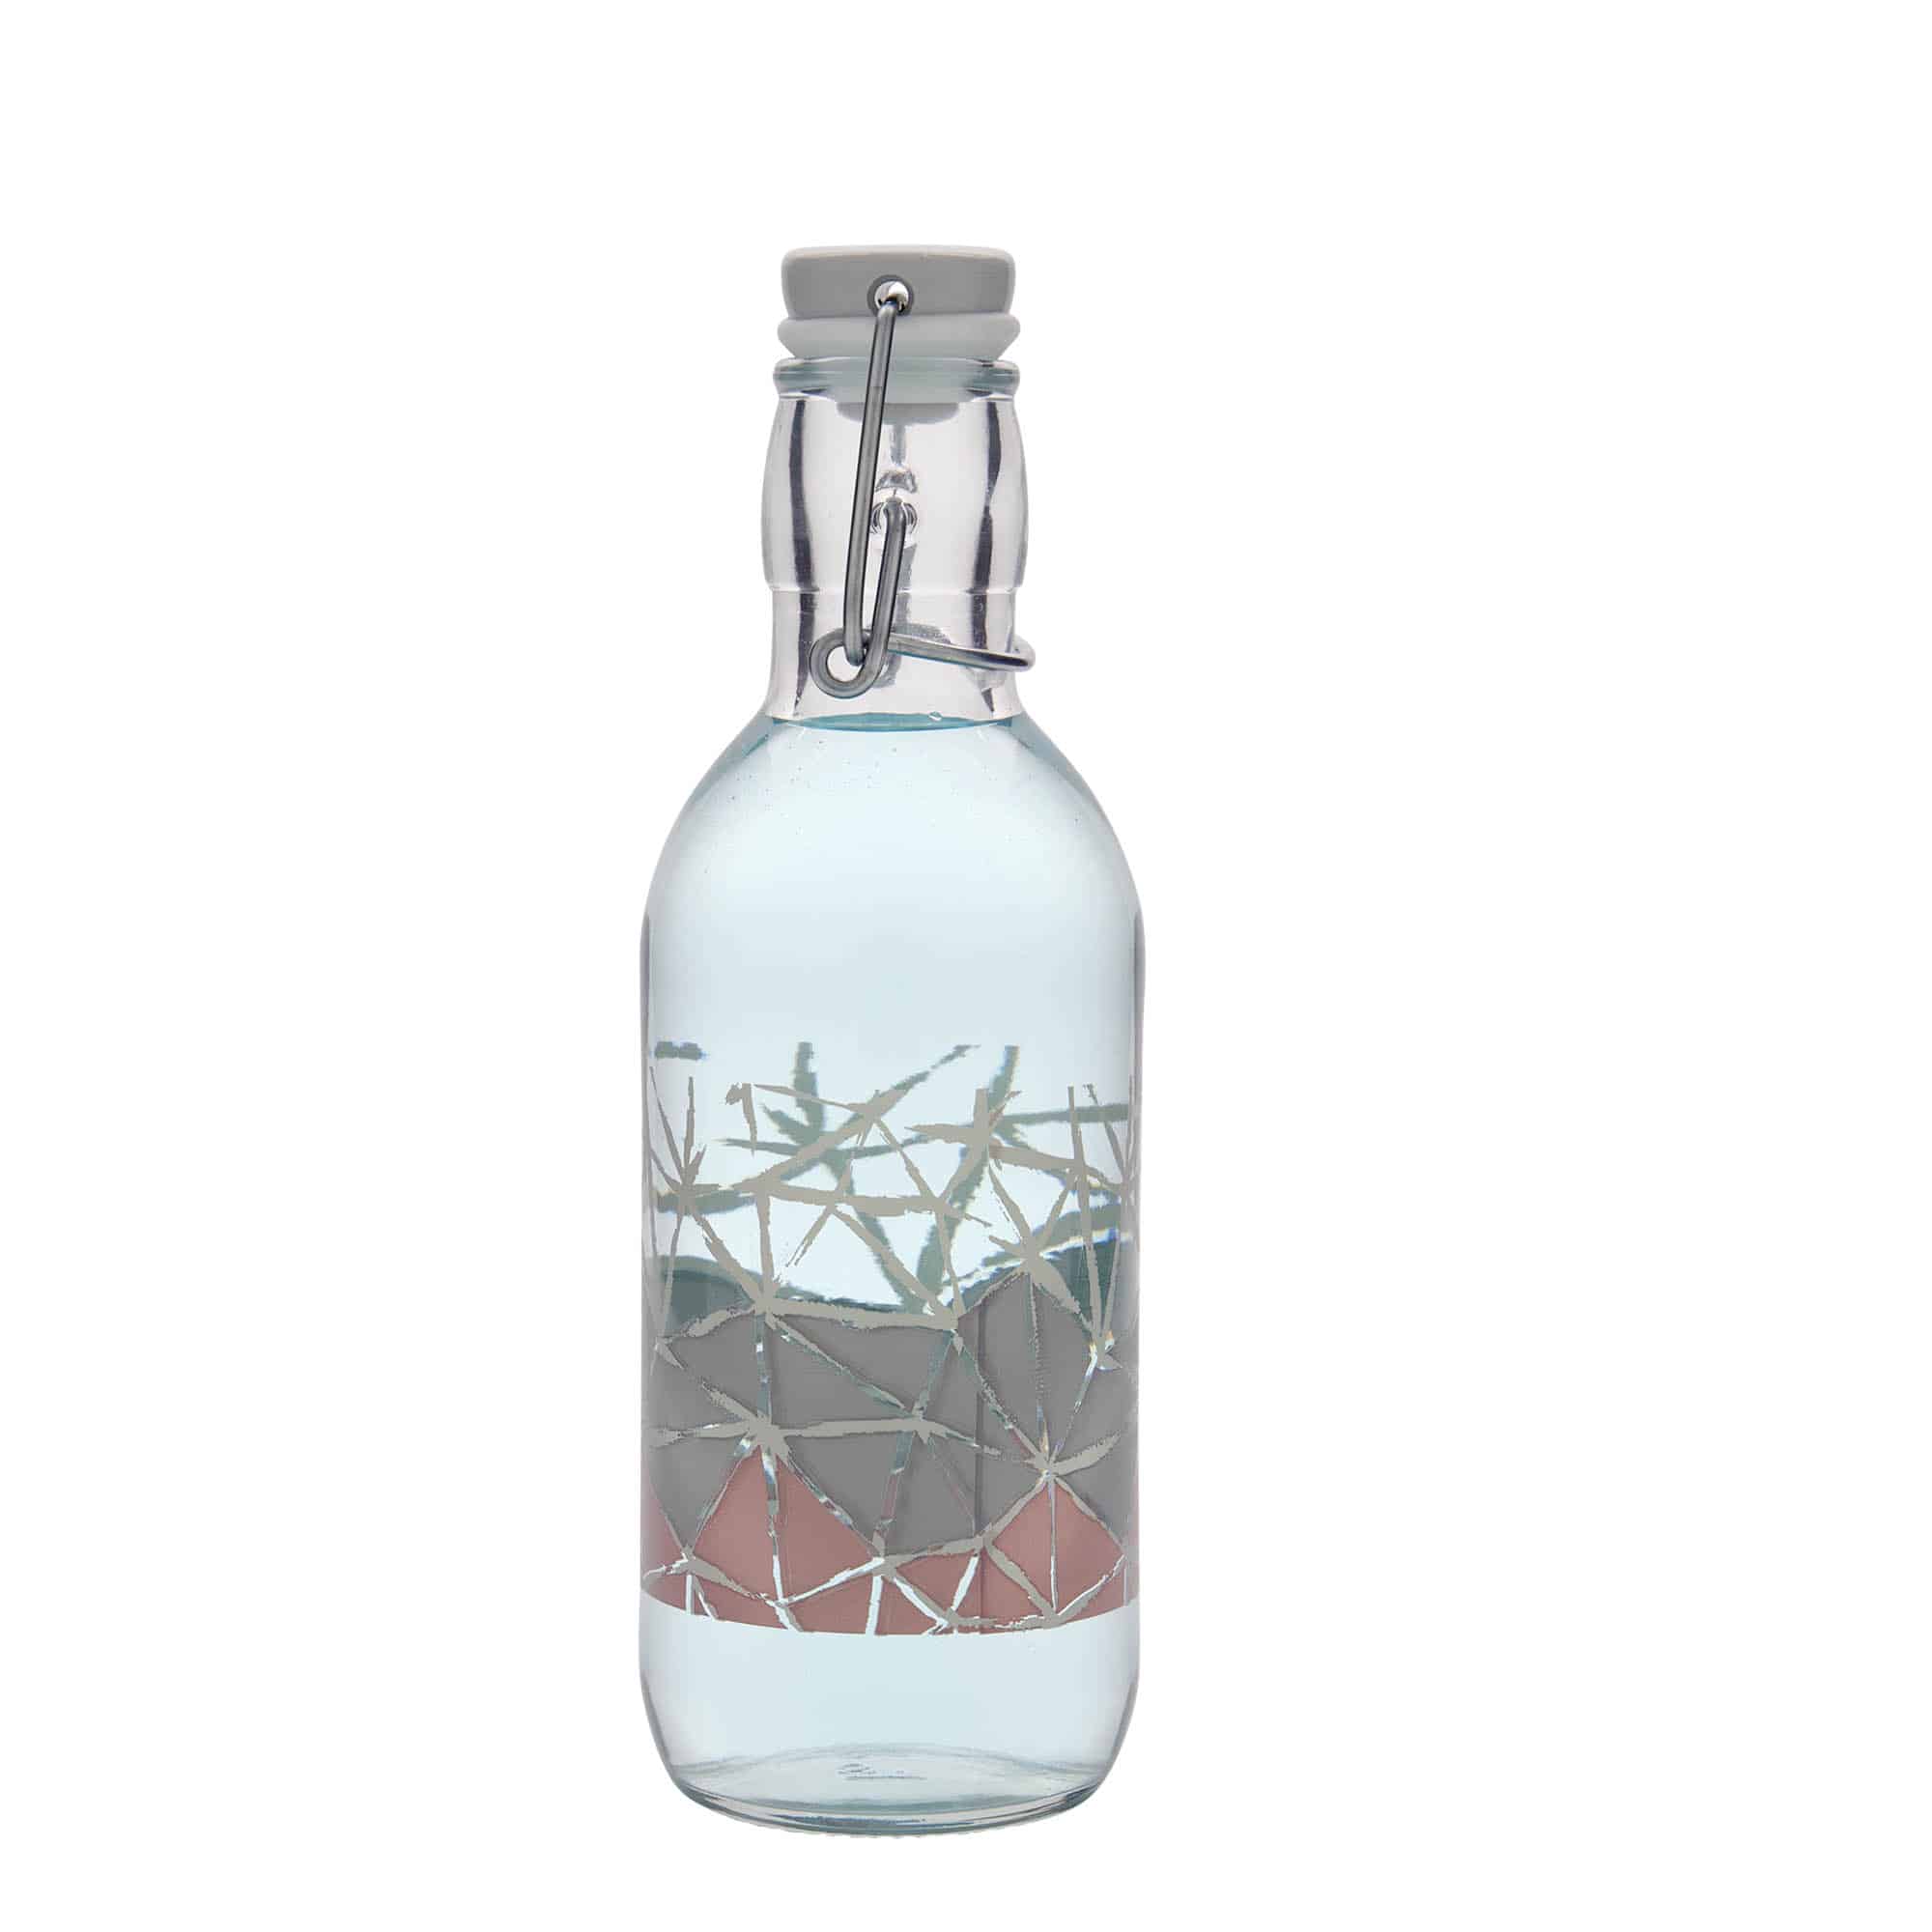 500 ml glass bottle 'Emilia', print: manolibera pink, closure: swing top